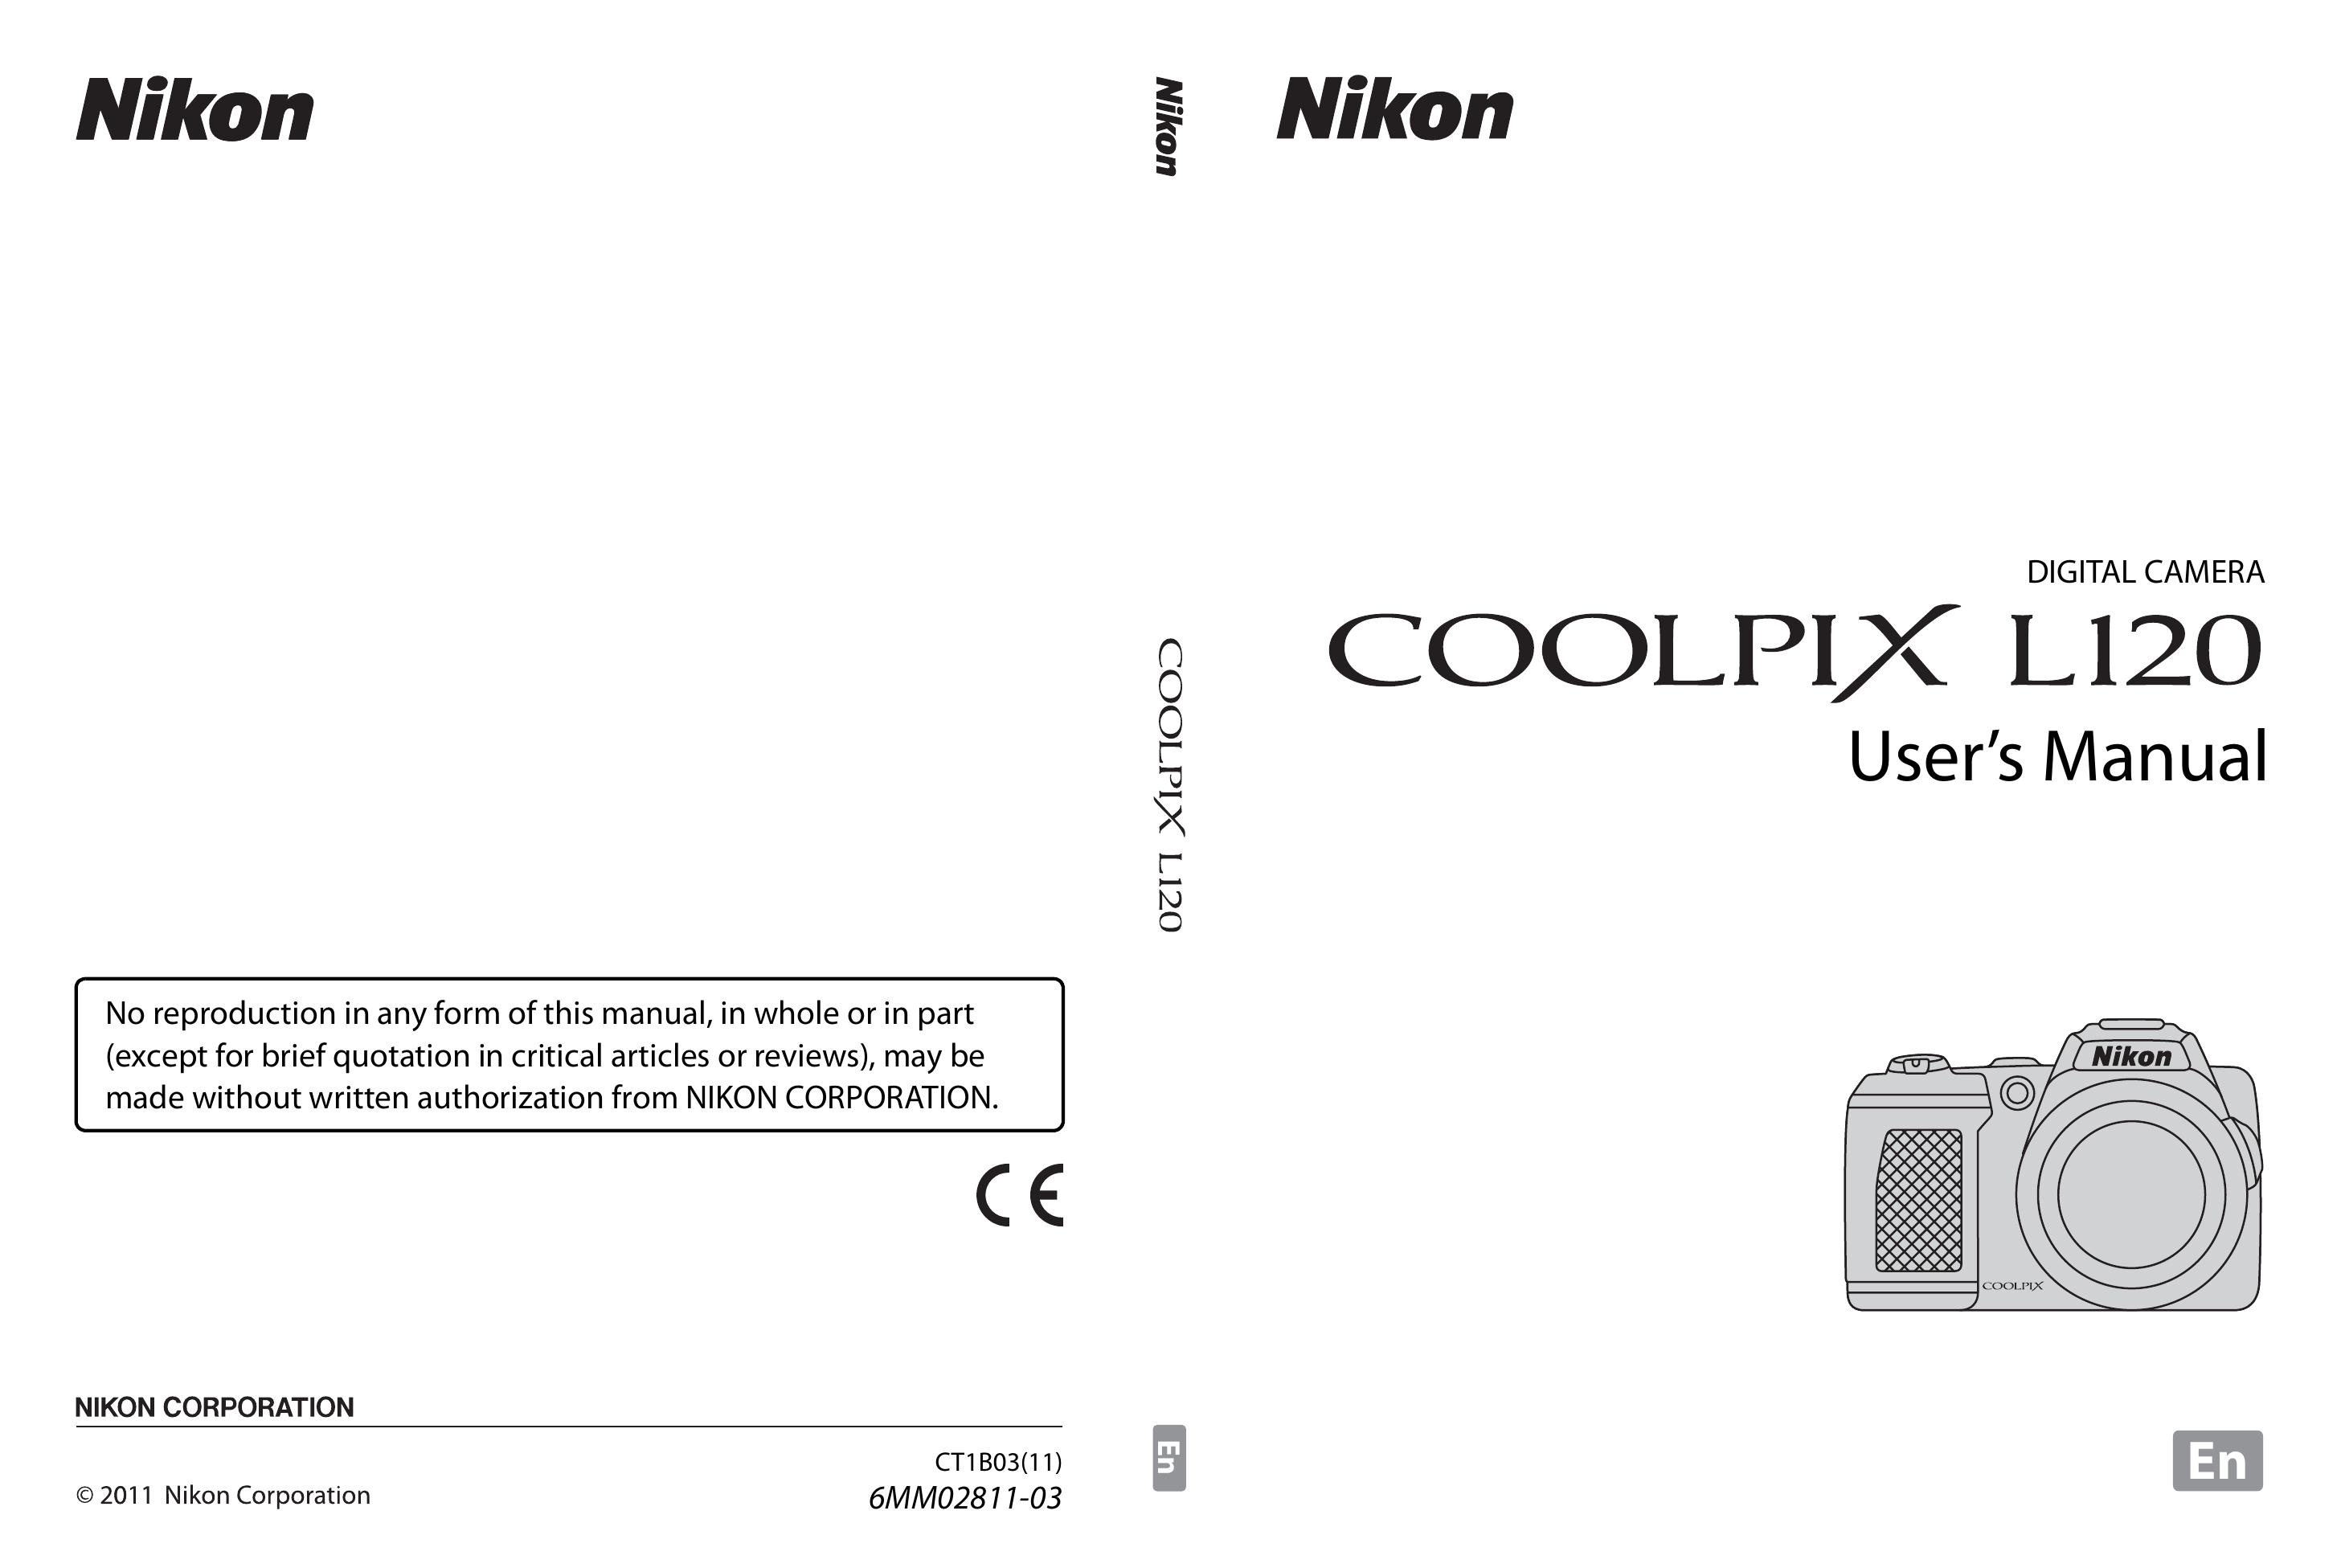 Nikon COOLPIXL120BRONZE Camcorder User Manual